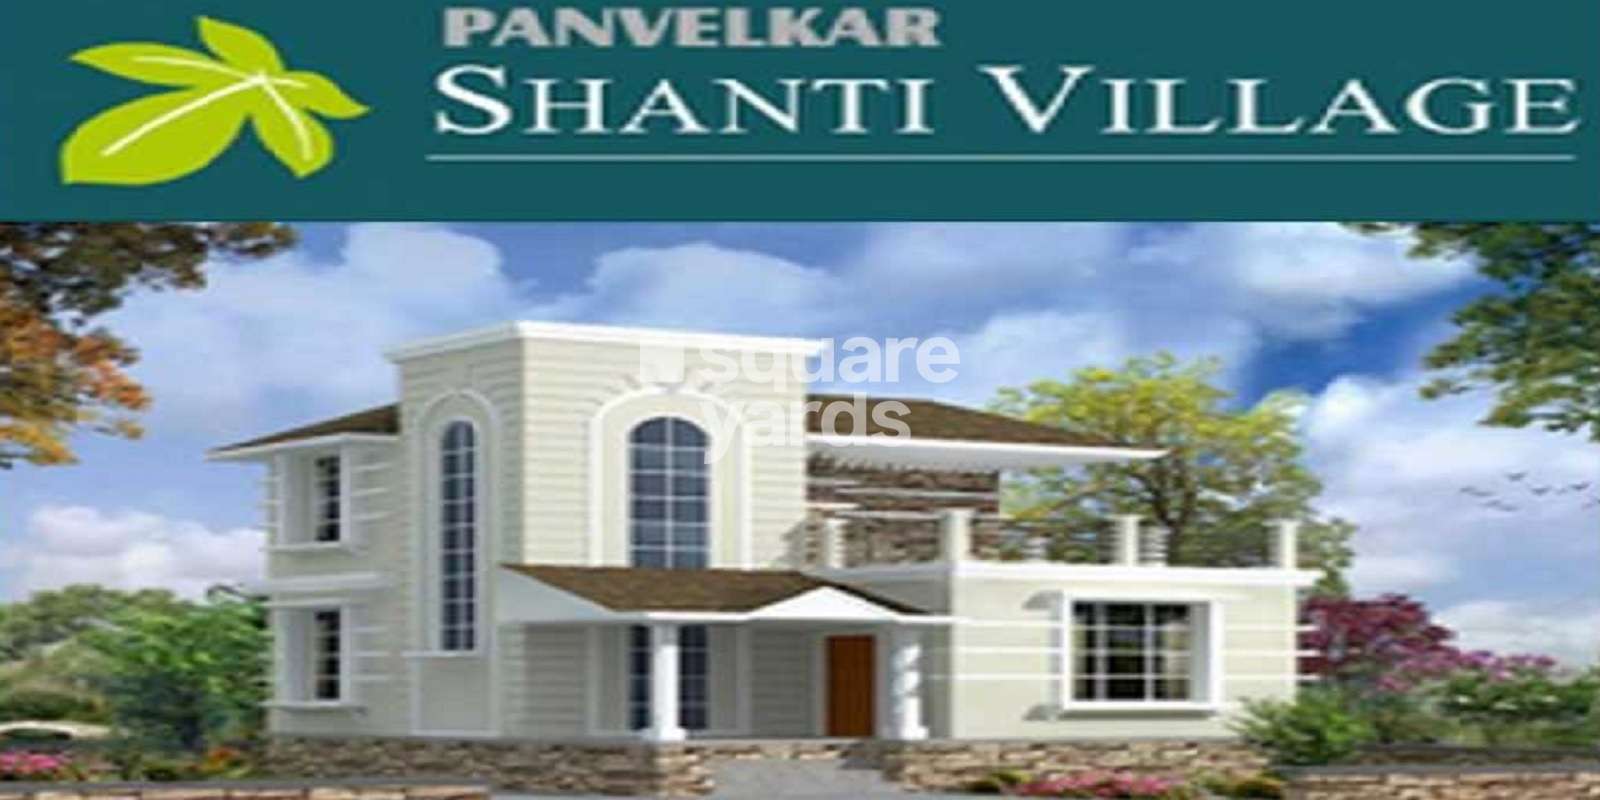 Panvelkar Shanti Village Cover Image